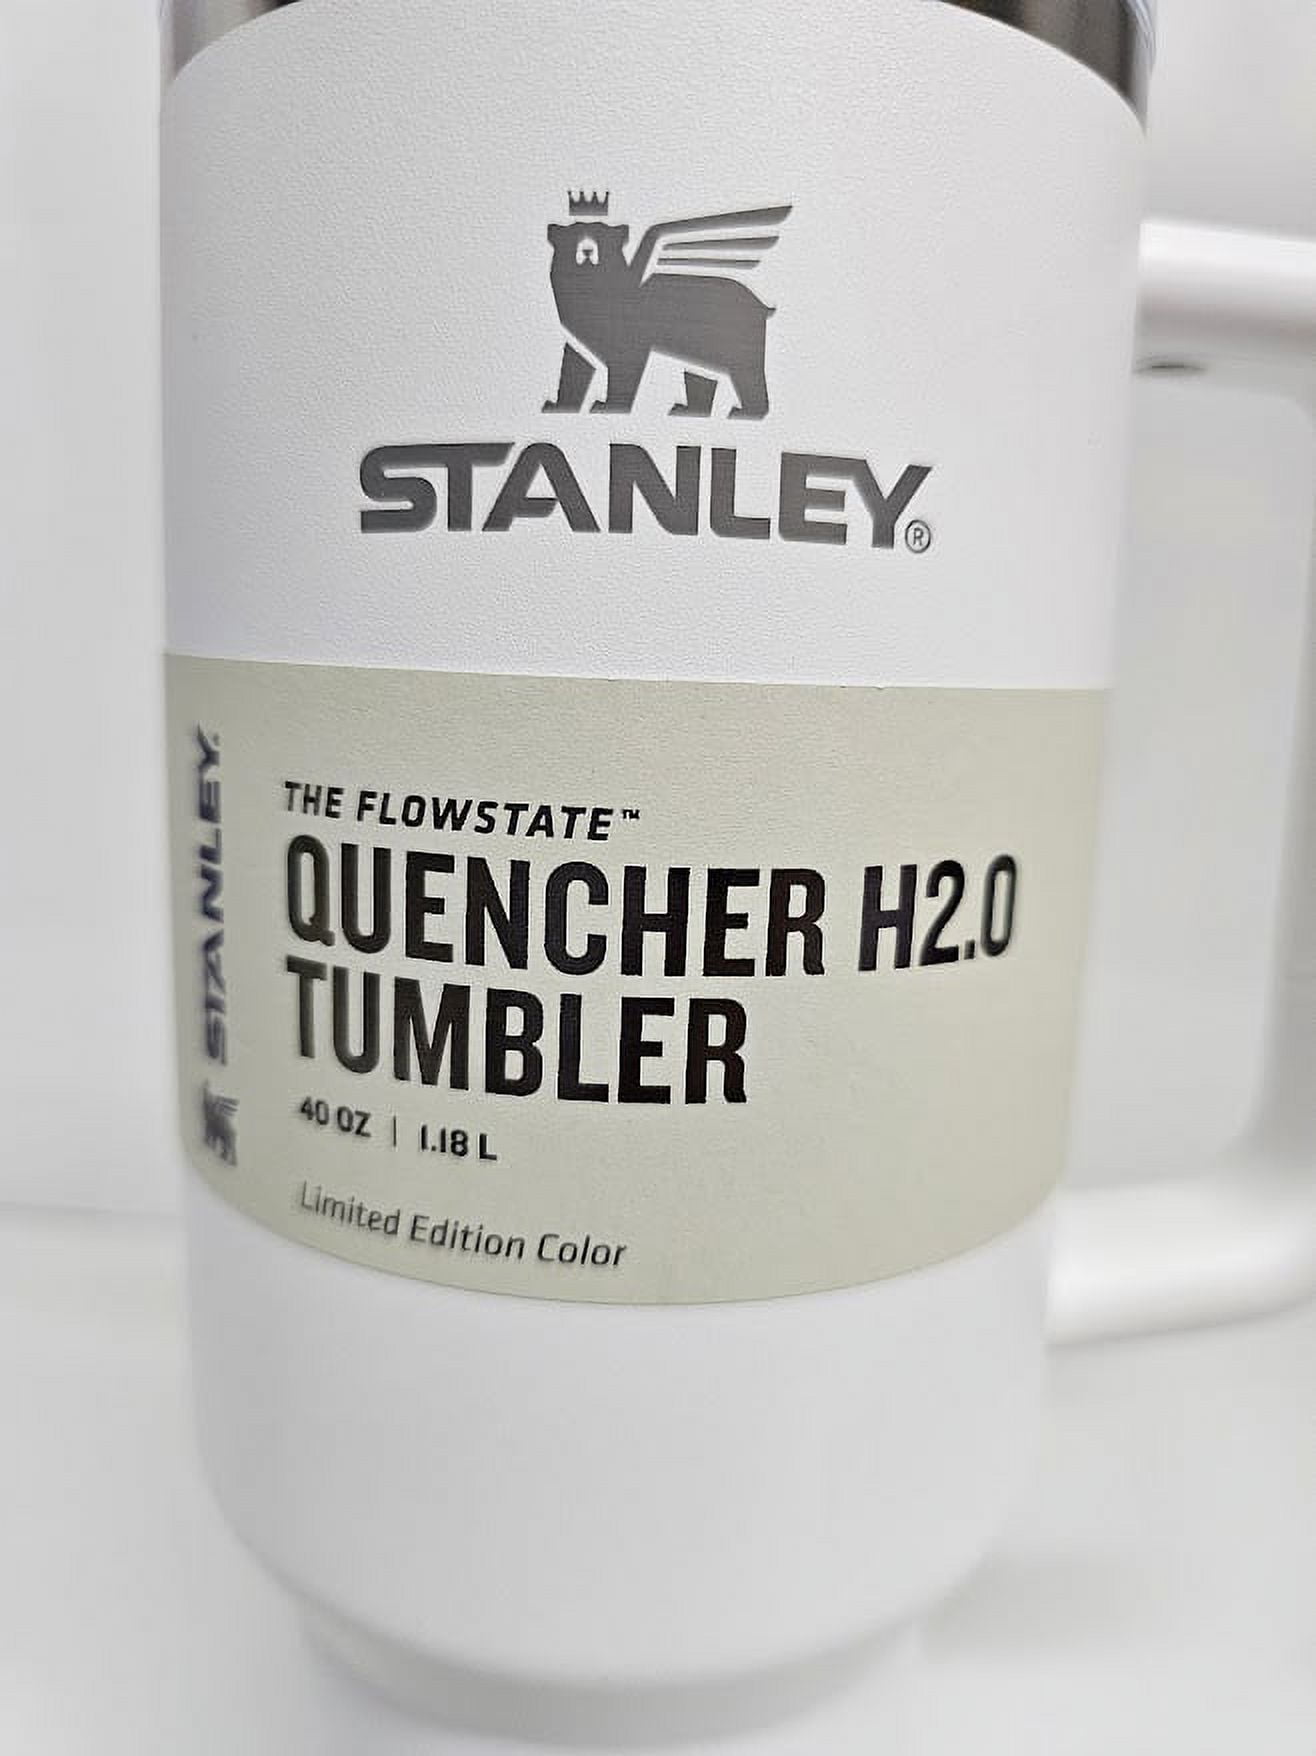 Stanley 40oz Flowstate Quencher H2.0 Tumbler - Flint – American Seasonal  Home